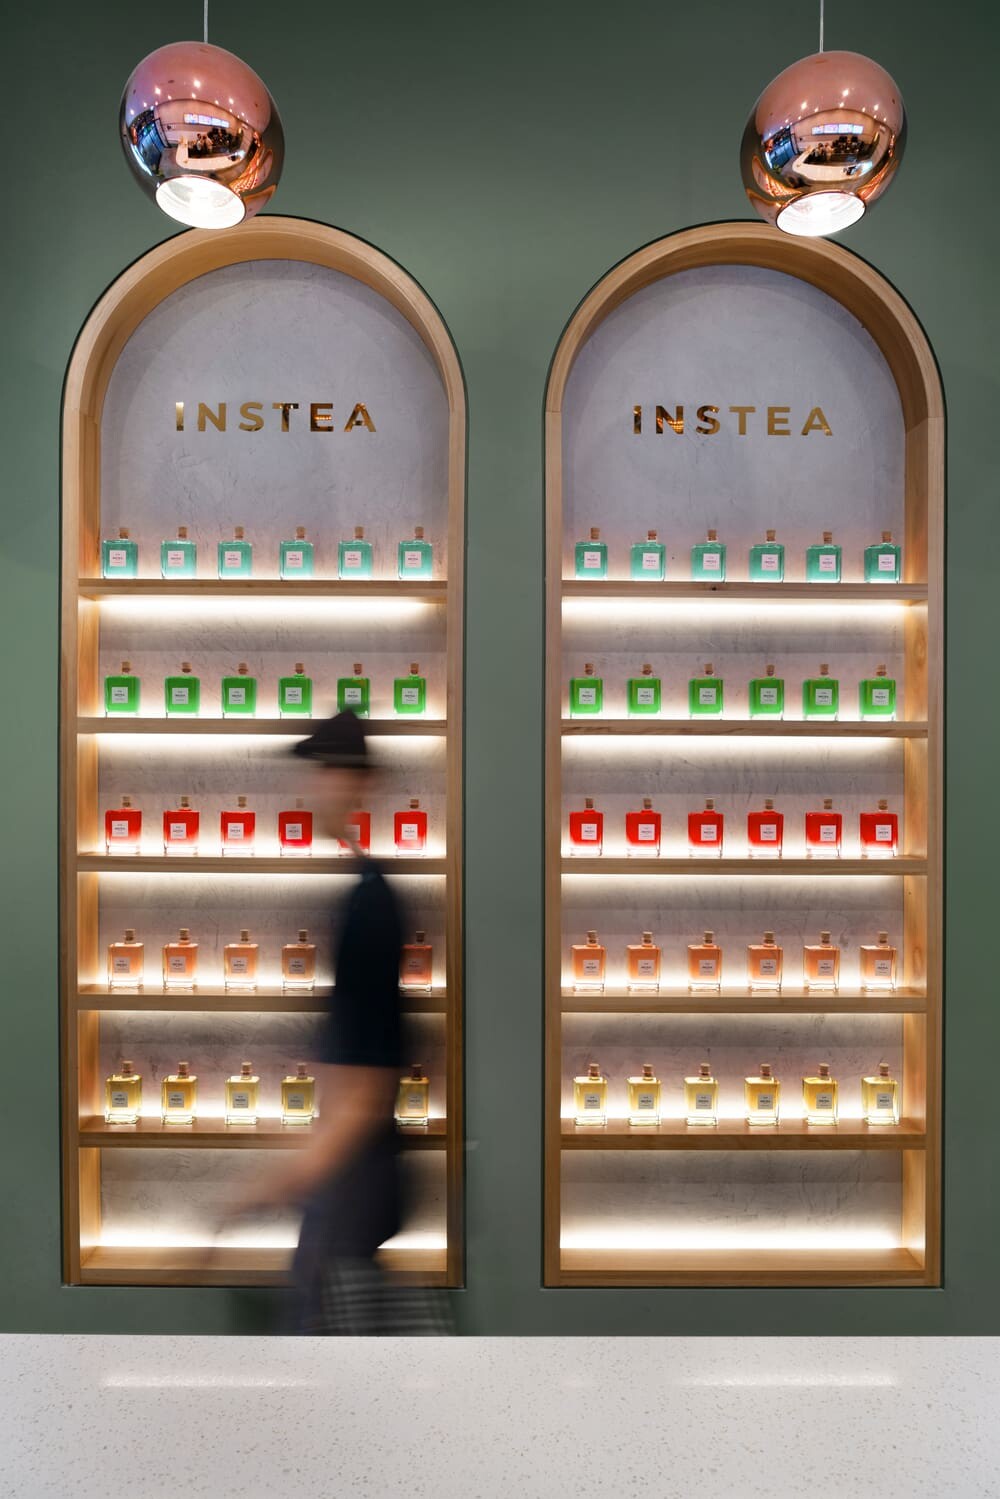 INSTEA Bubble Tea Store - A Design Exploration in User Engagement